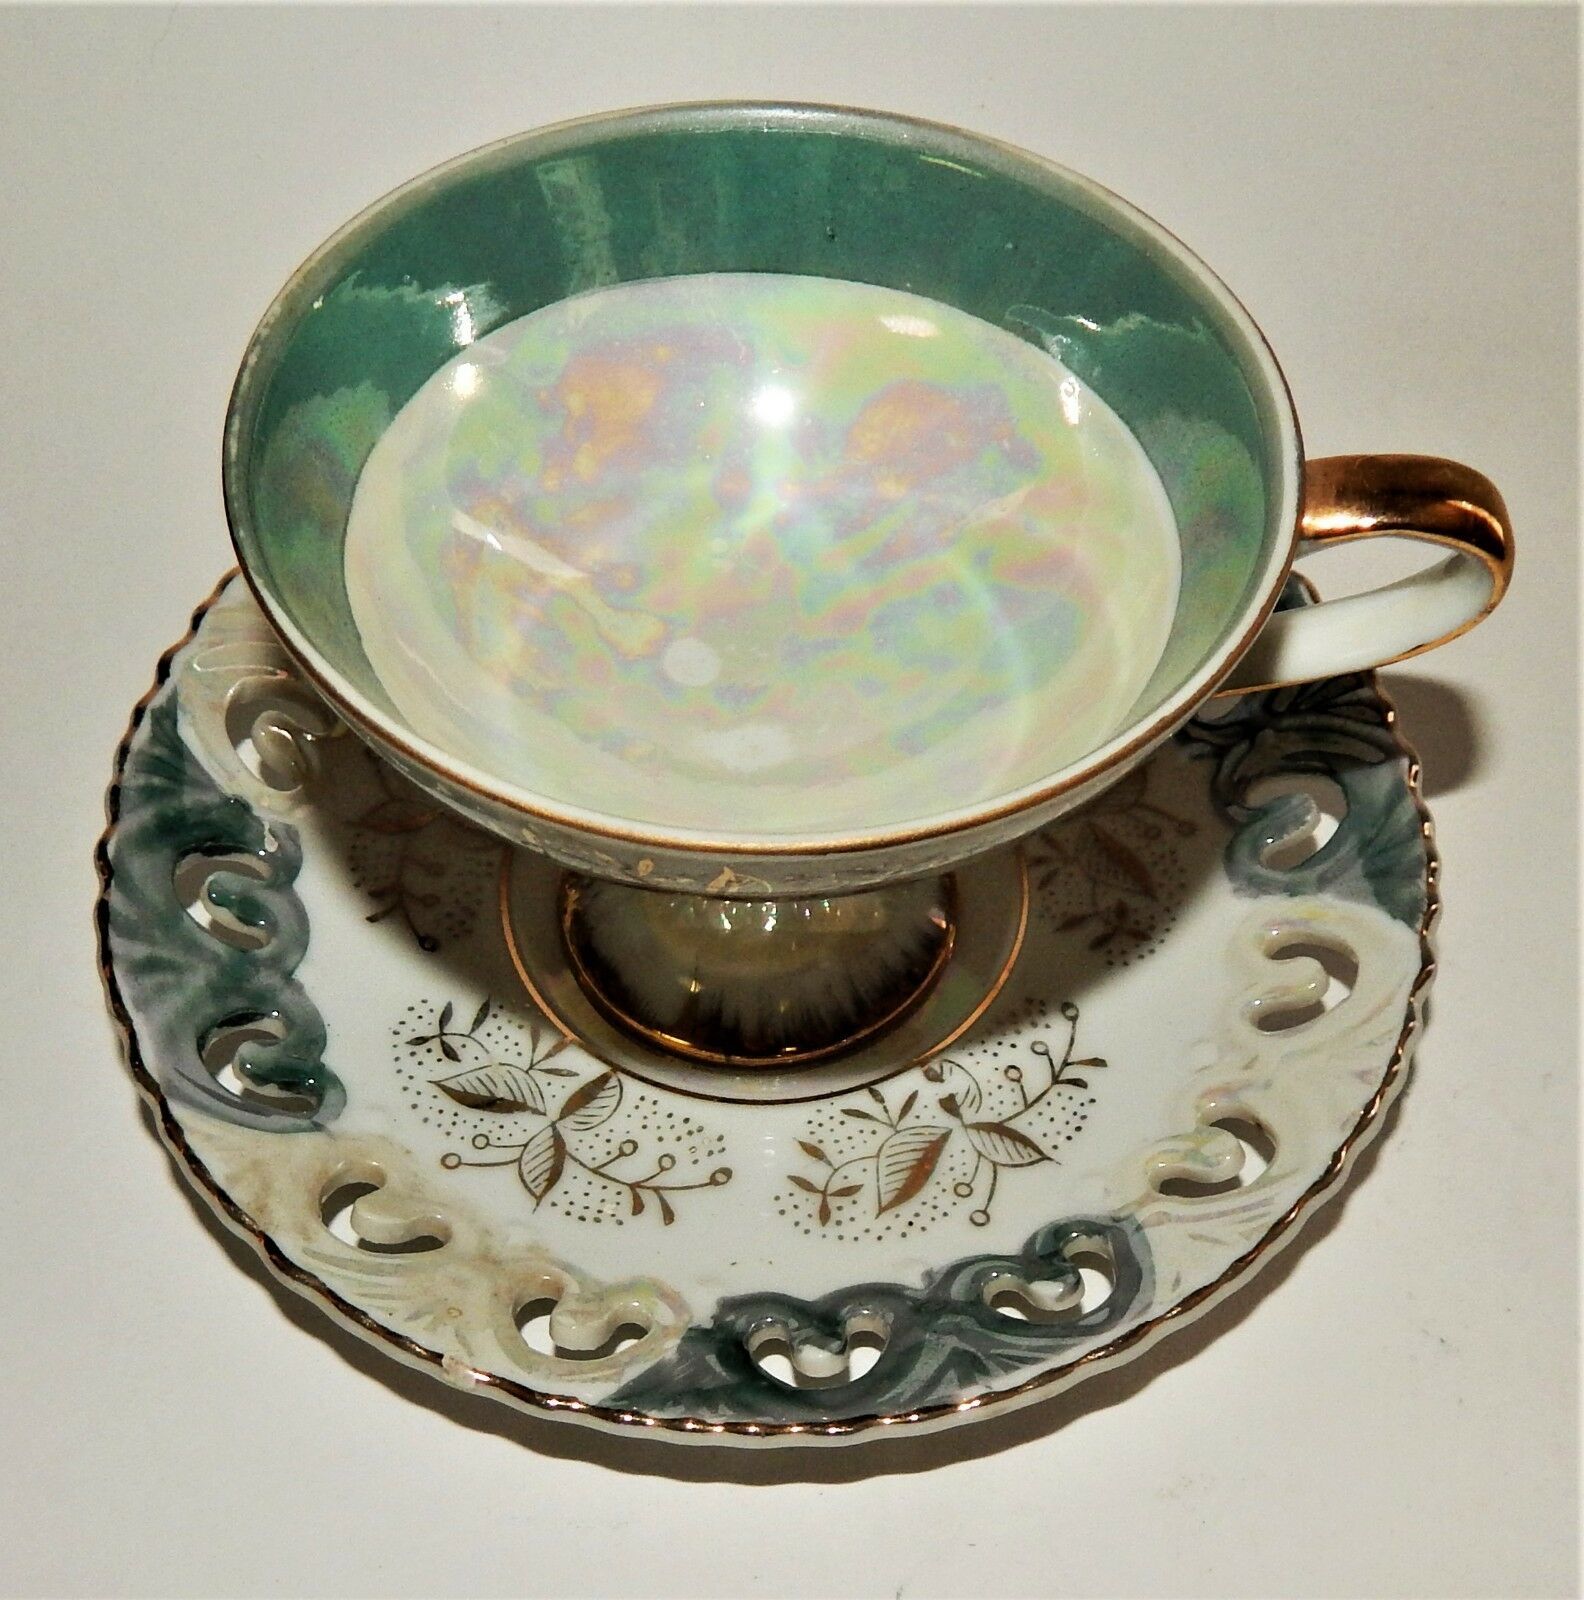 Vintage Teacup Japanese Teacup Lefton Tea Cup Turquoise Teacup Antique Teacup Hand Painted Lefton Teacup Aqua Gold Teacup